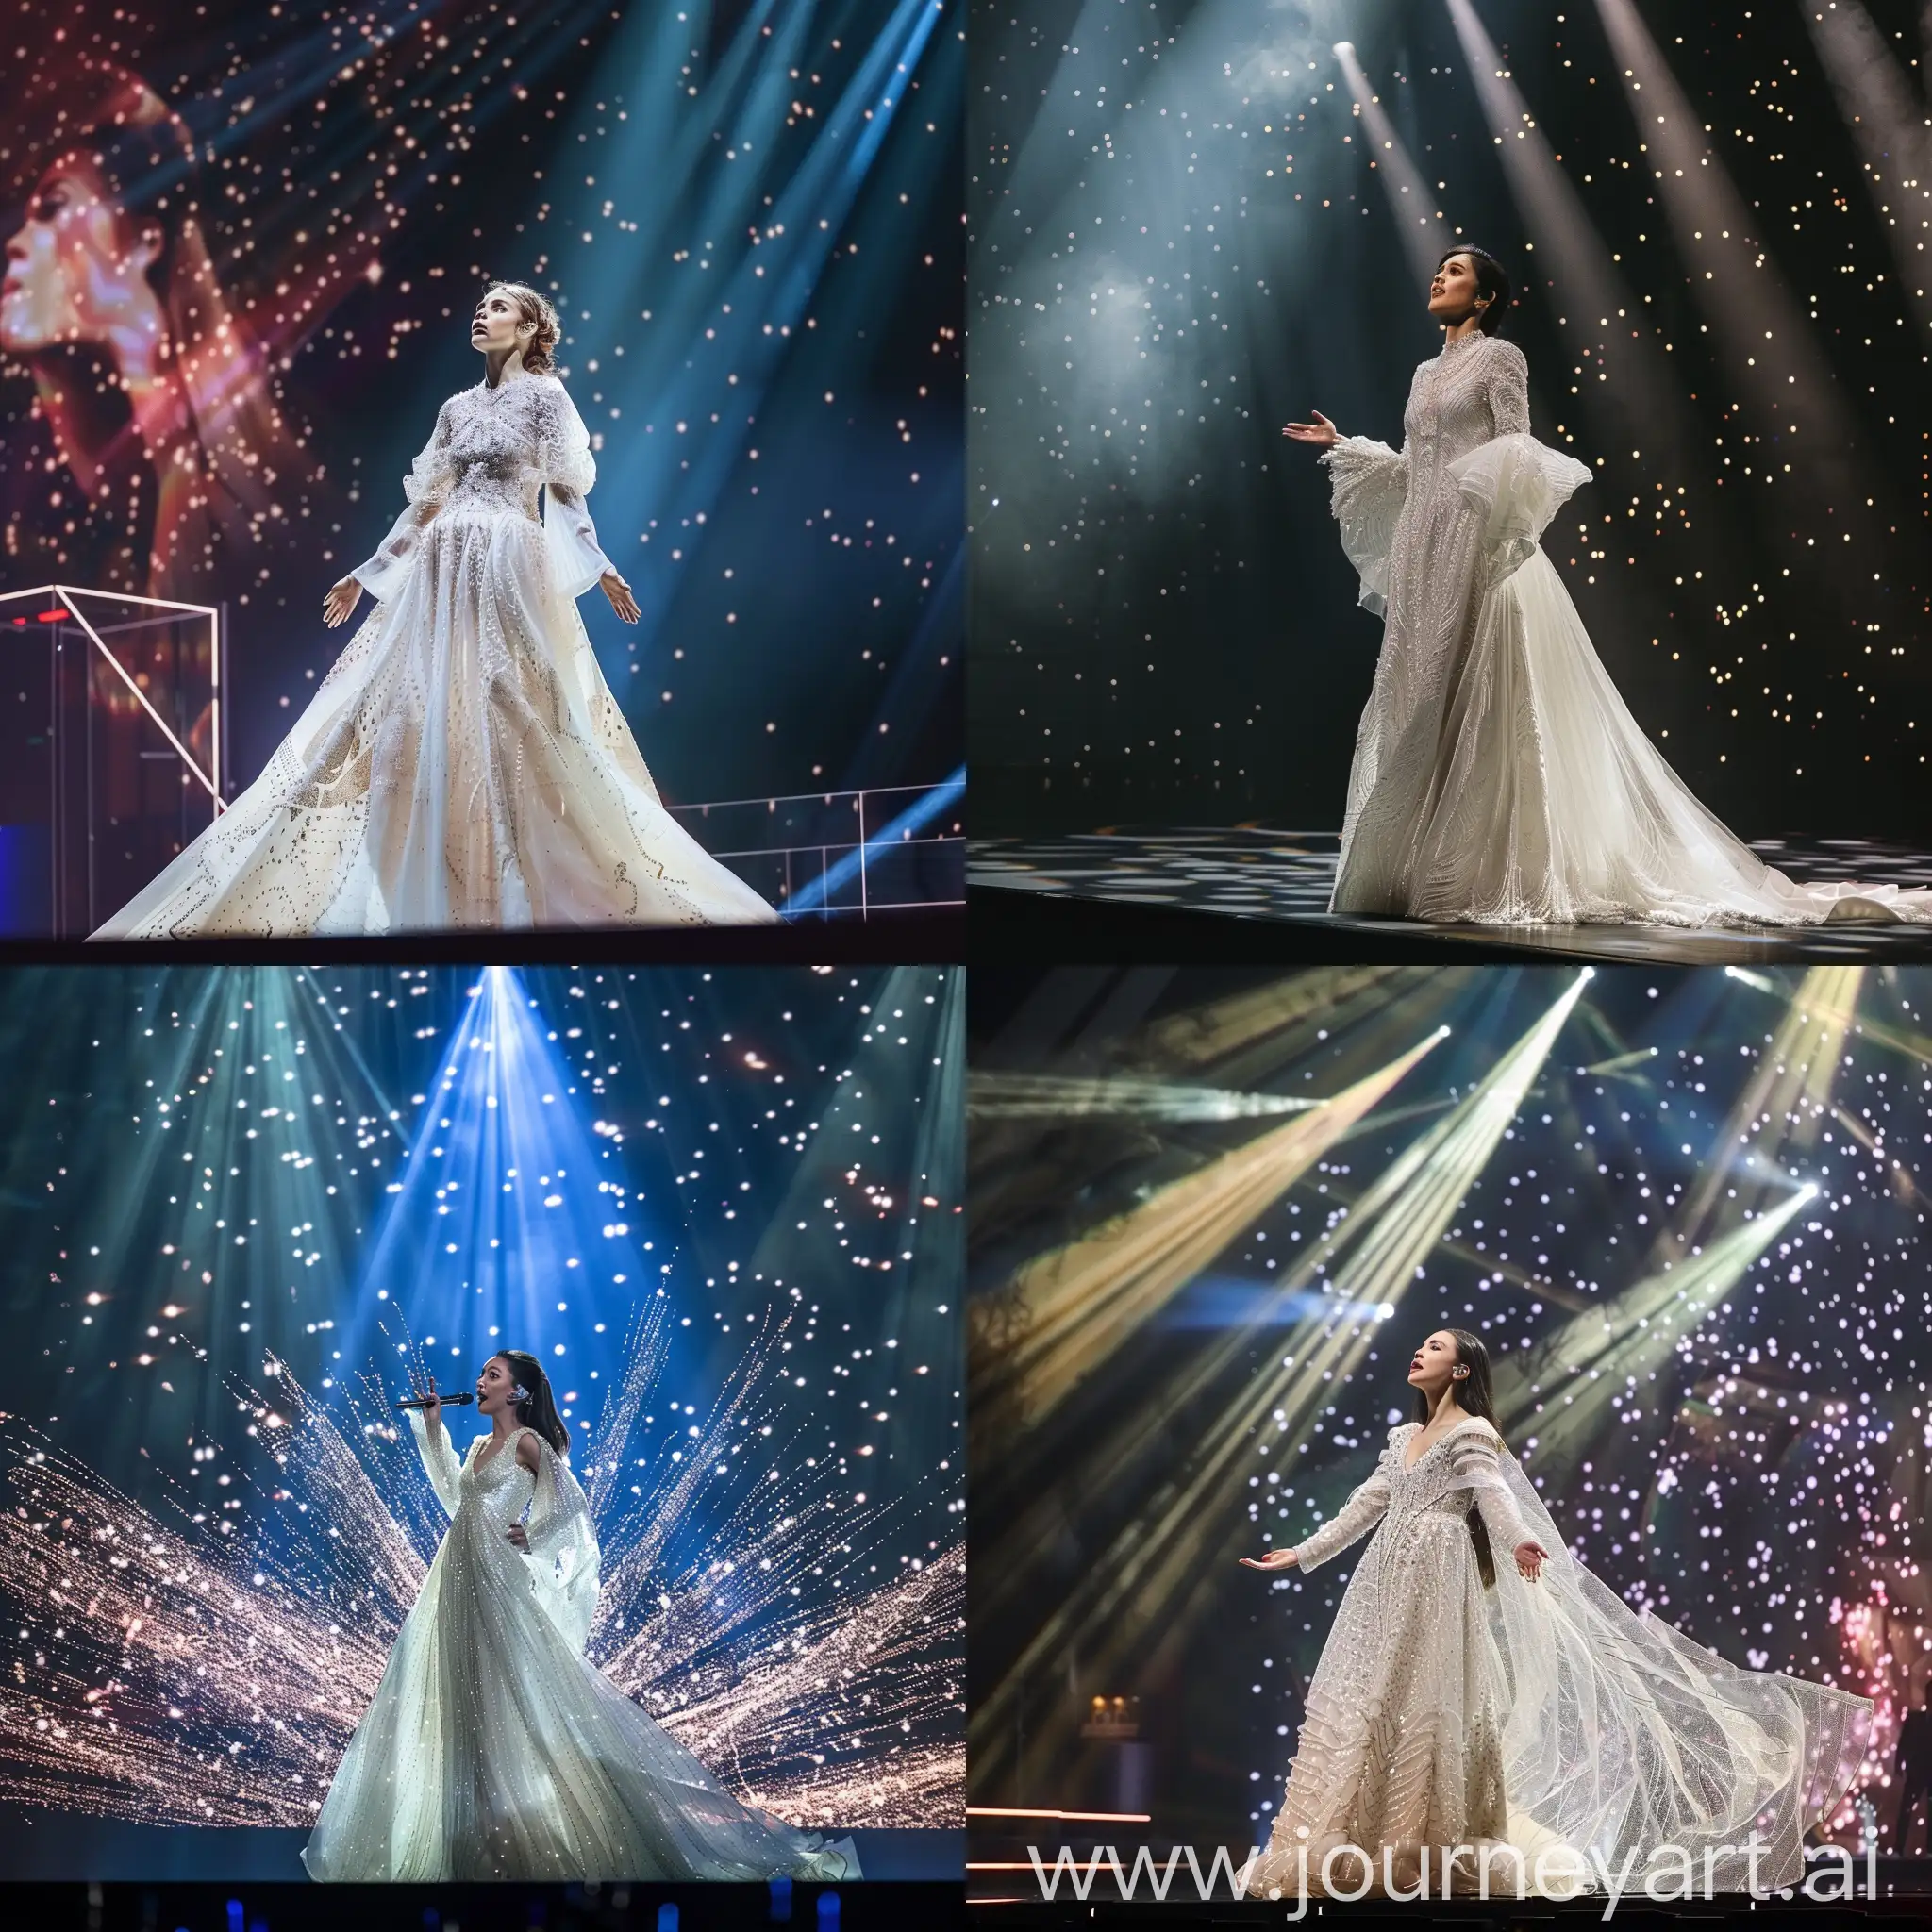 Eurovision-Stage-Performance-Girl-in-Stunning-White-Dress-Singing